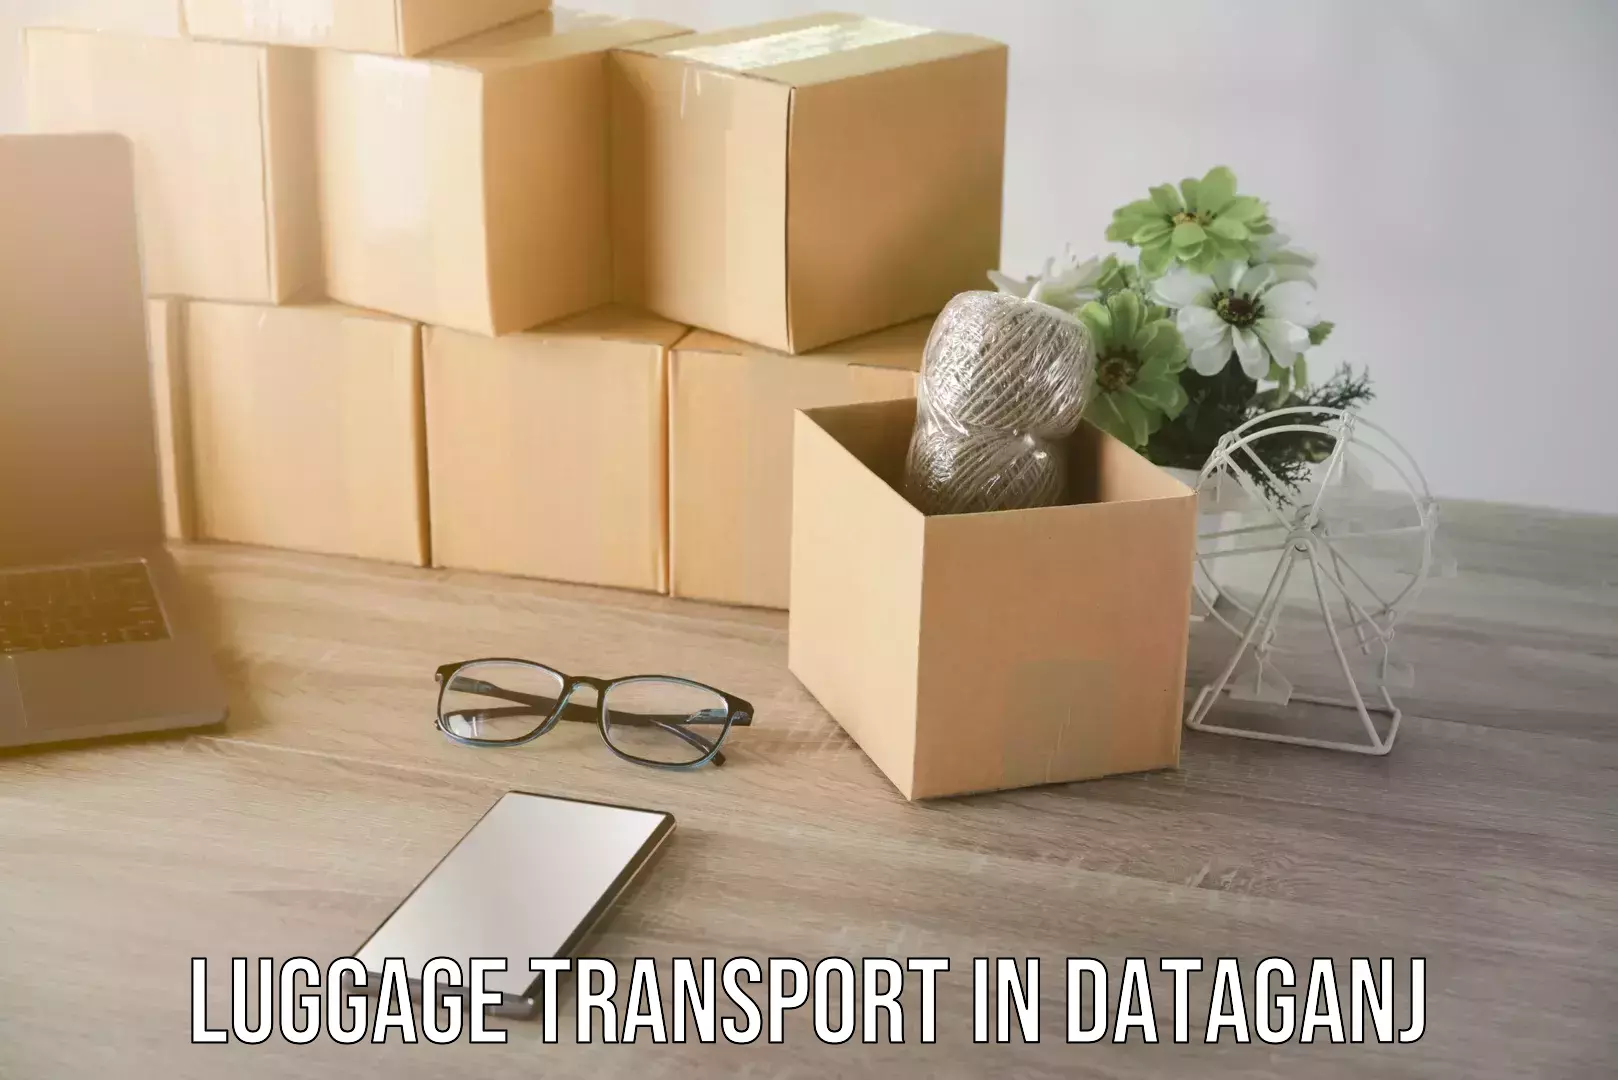 Luggage transport rates in Dataganj